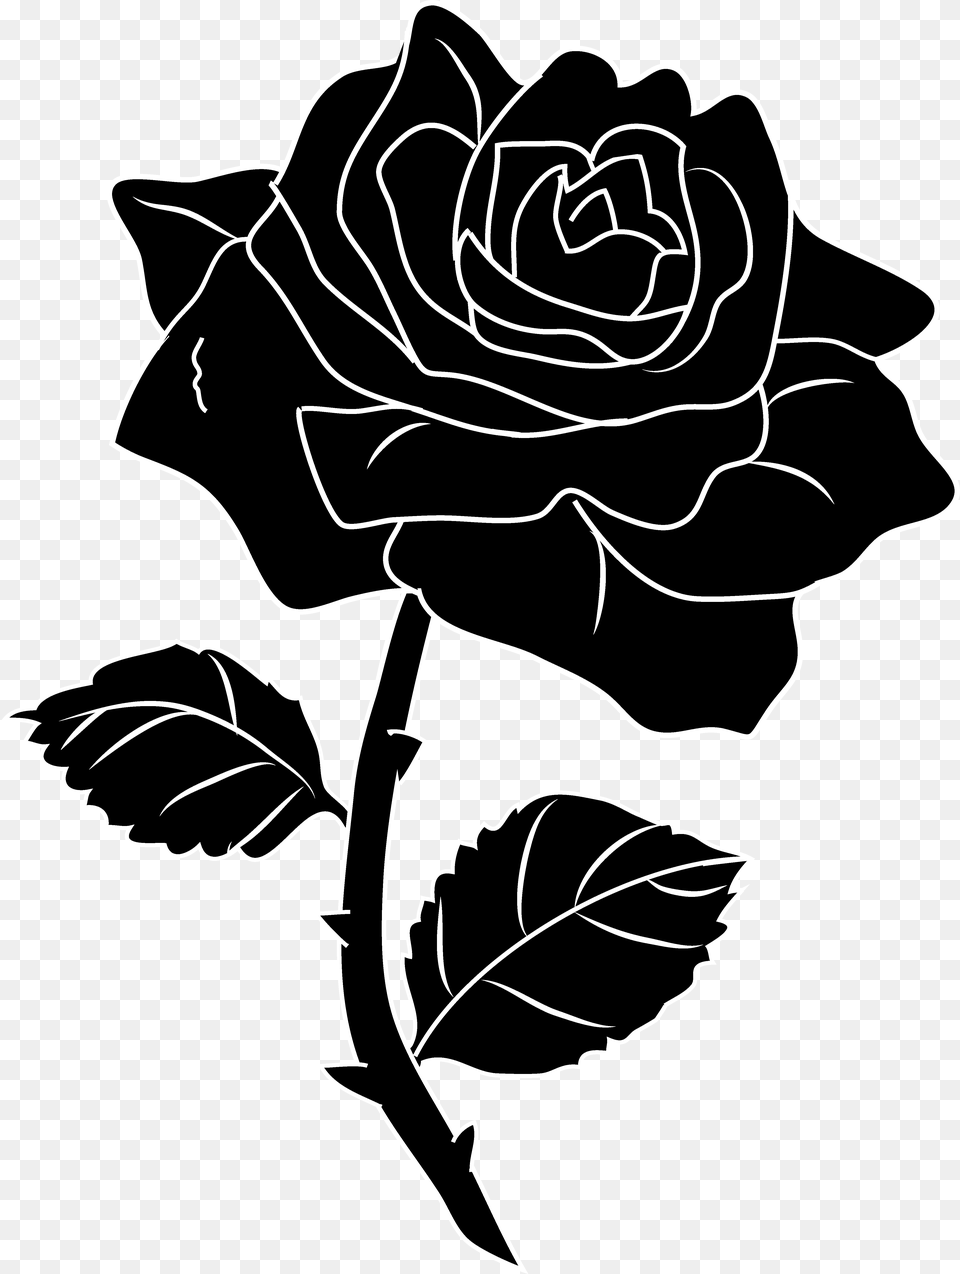 Forerunner 945 English Garmin Vivoactive 4, Flower, Plant, Rose, Stencil Png Image